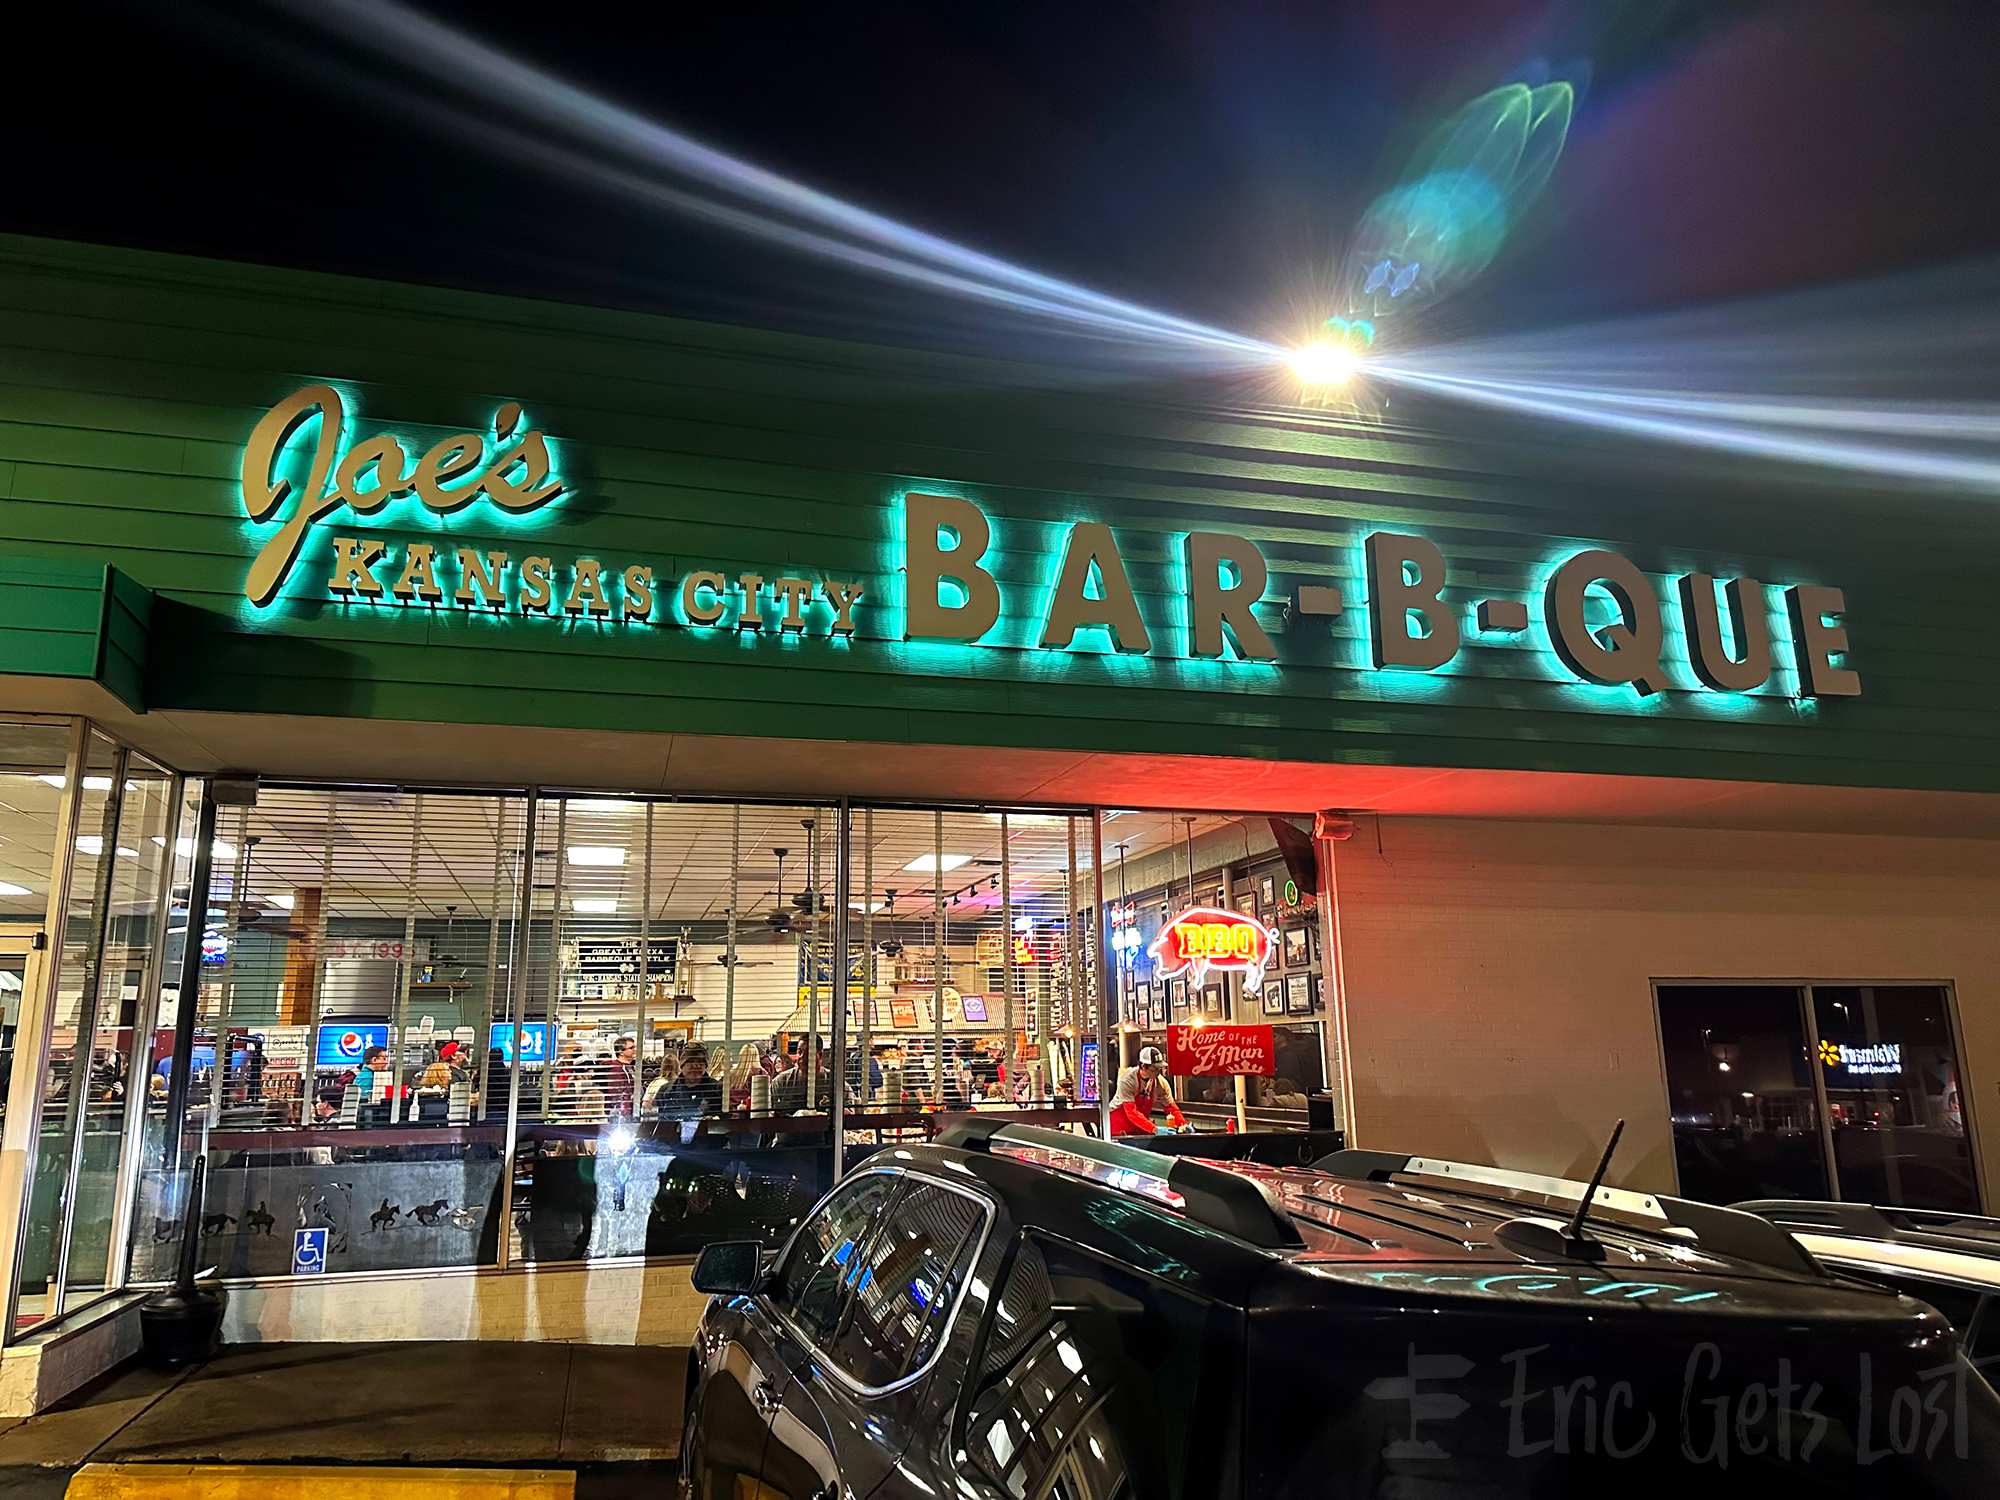 Joe’s Kansas City Bar-B-Que